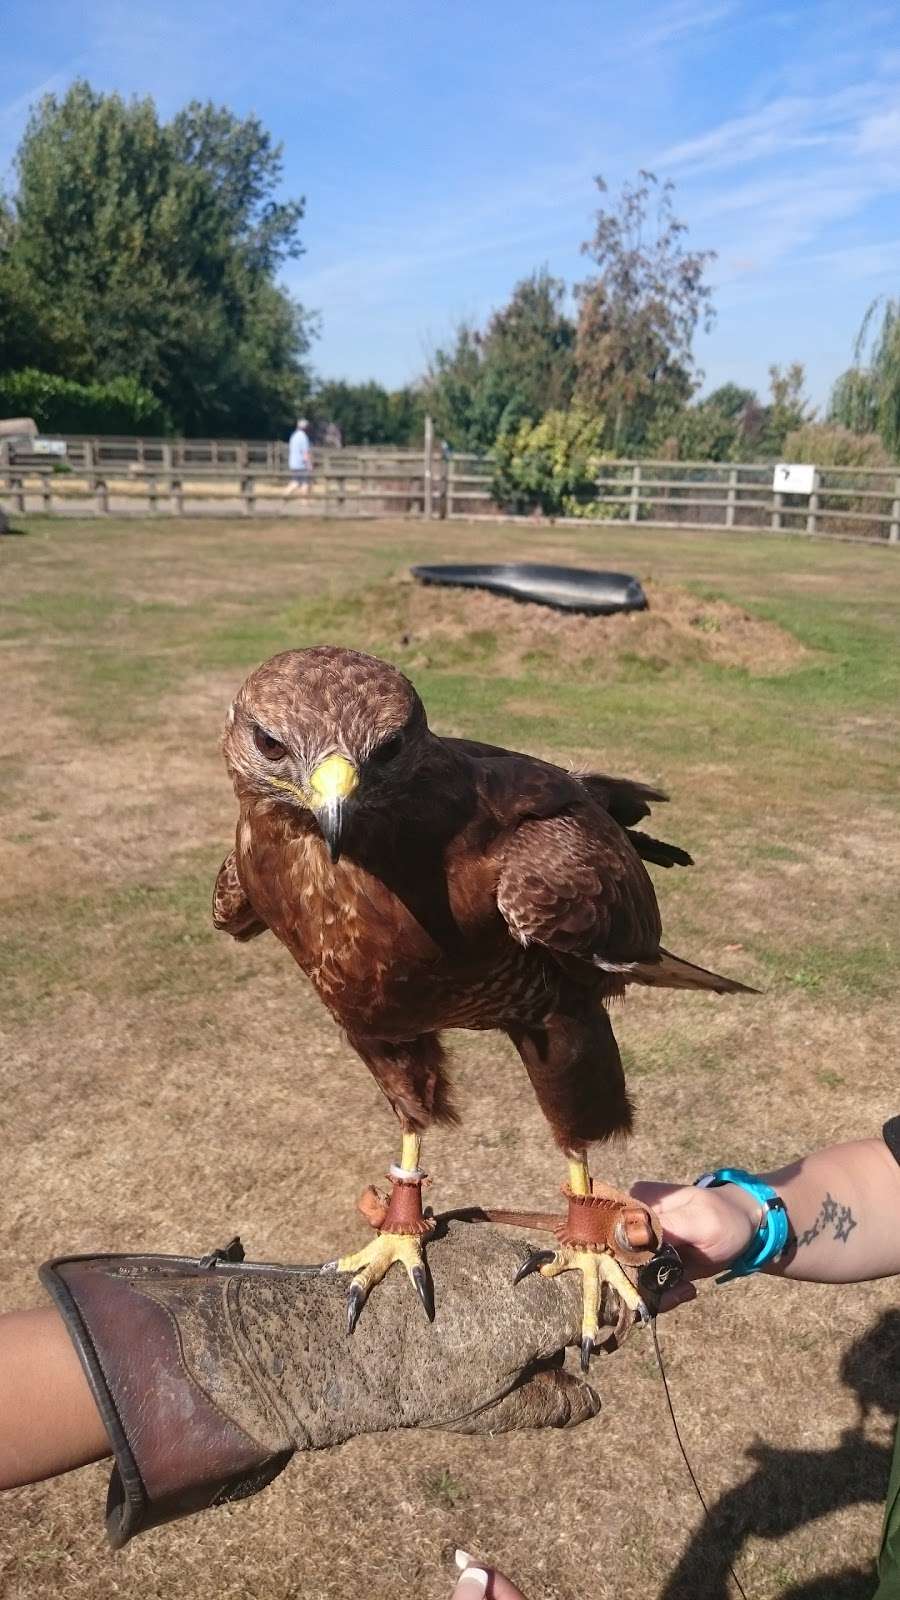 Imperial bird of prey academy | Barleylands Farm park, Barleylands Rd, Billericay CM11 2UD, UK | Phone: 01268 520176